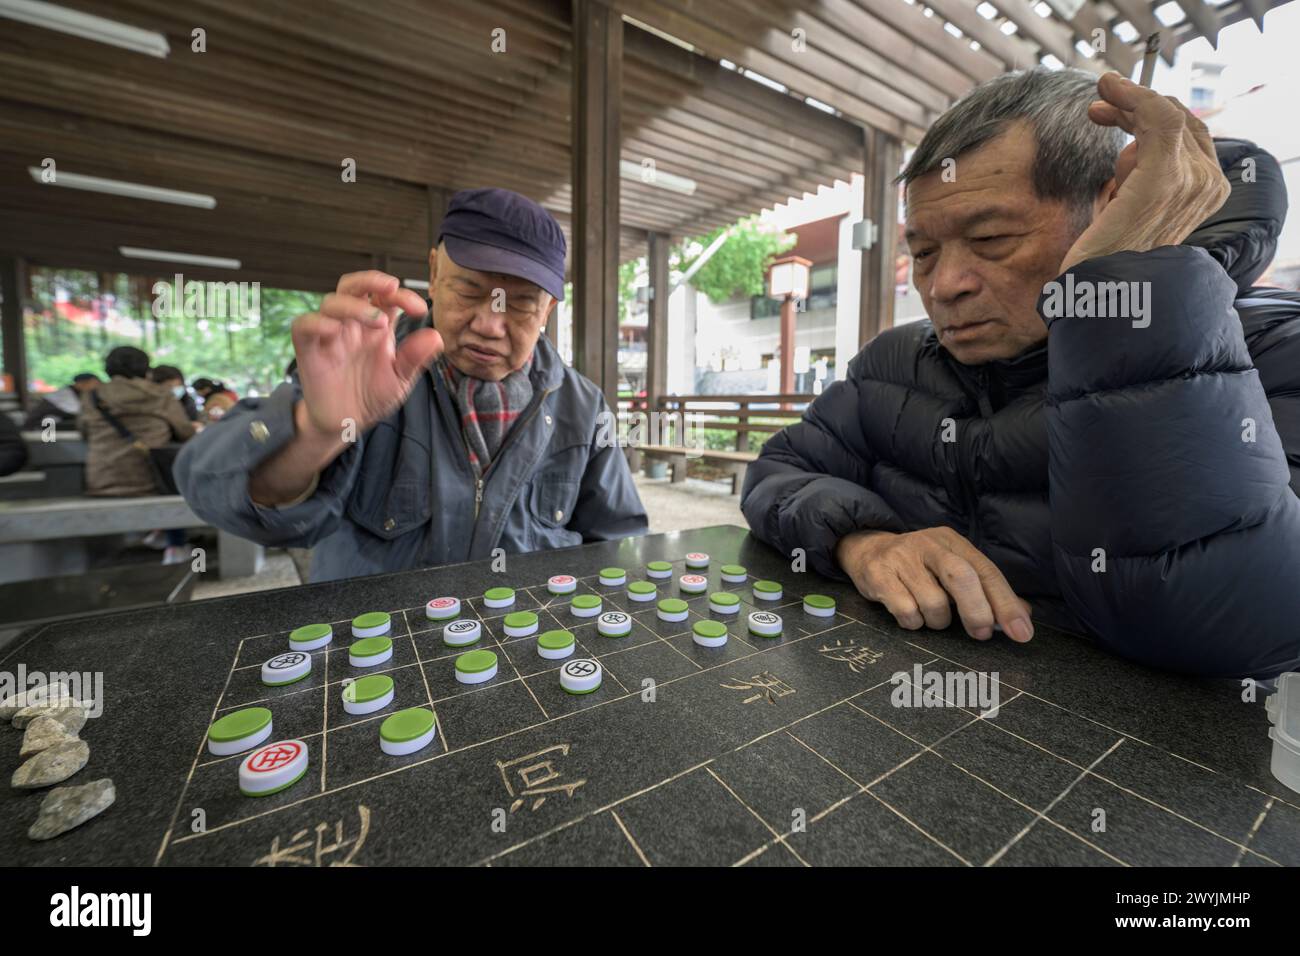 Senior men deeply focused on a strategic board game Stock Photo